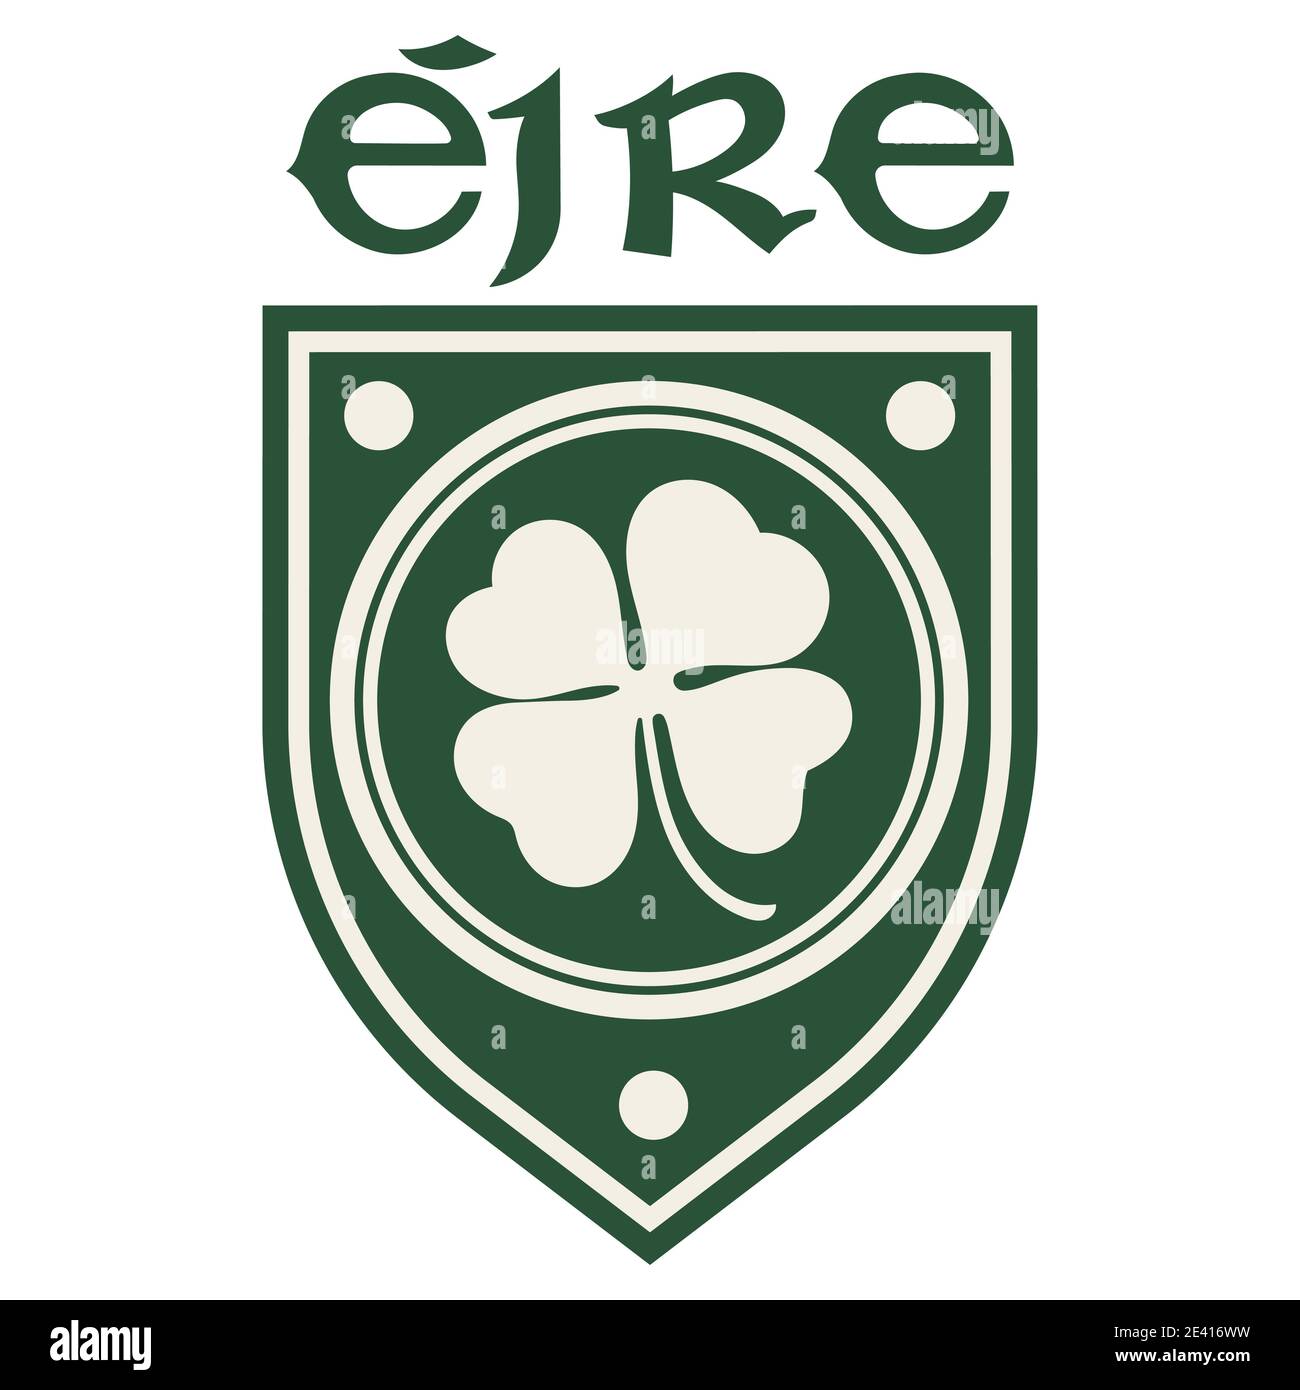 Irish Celtic Design In Vintage Retro Style Celtic Style Clover Irish Symbol For The Feast Of